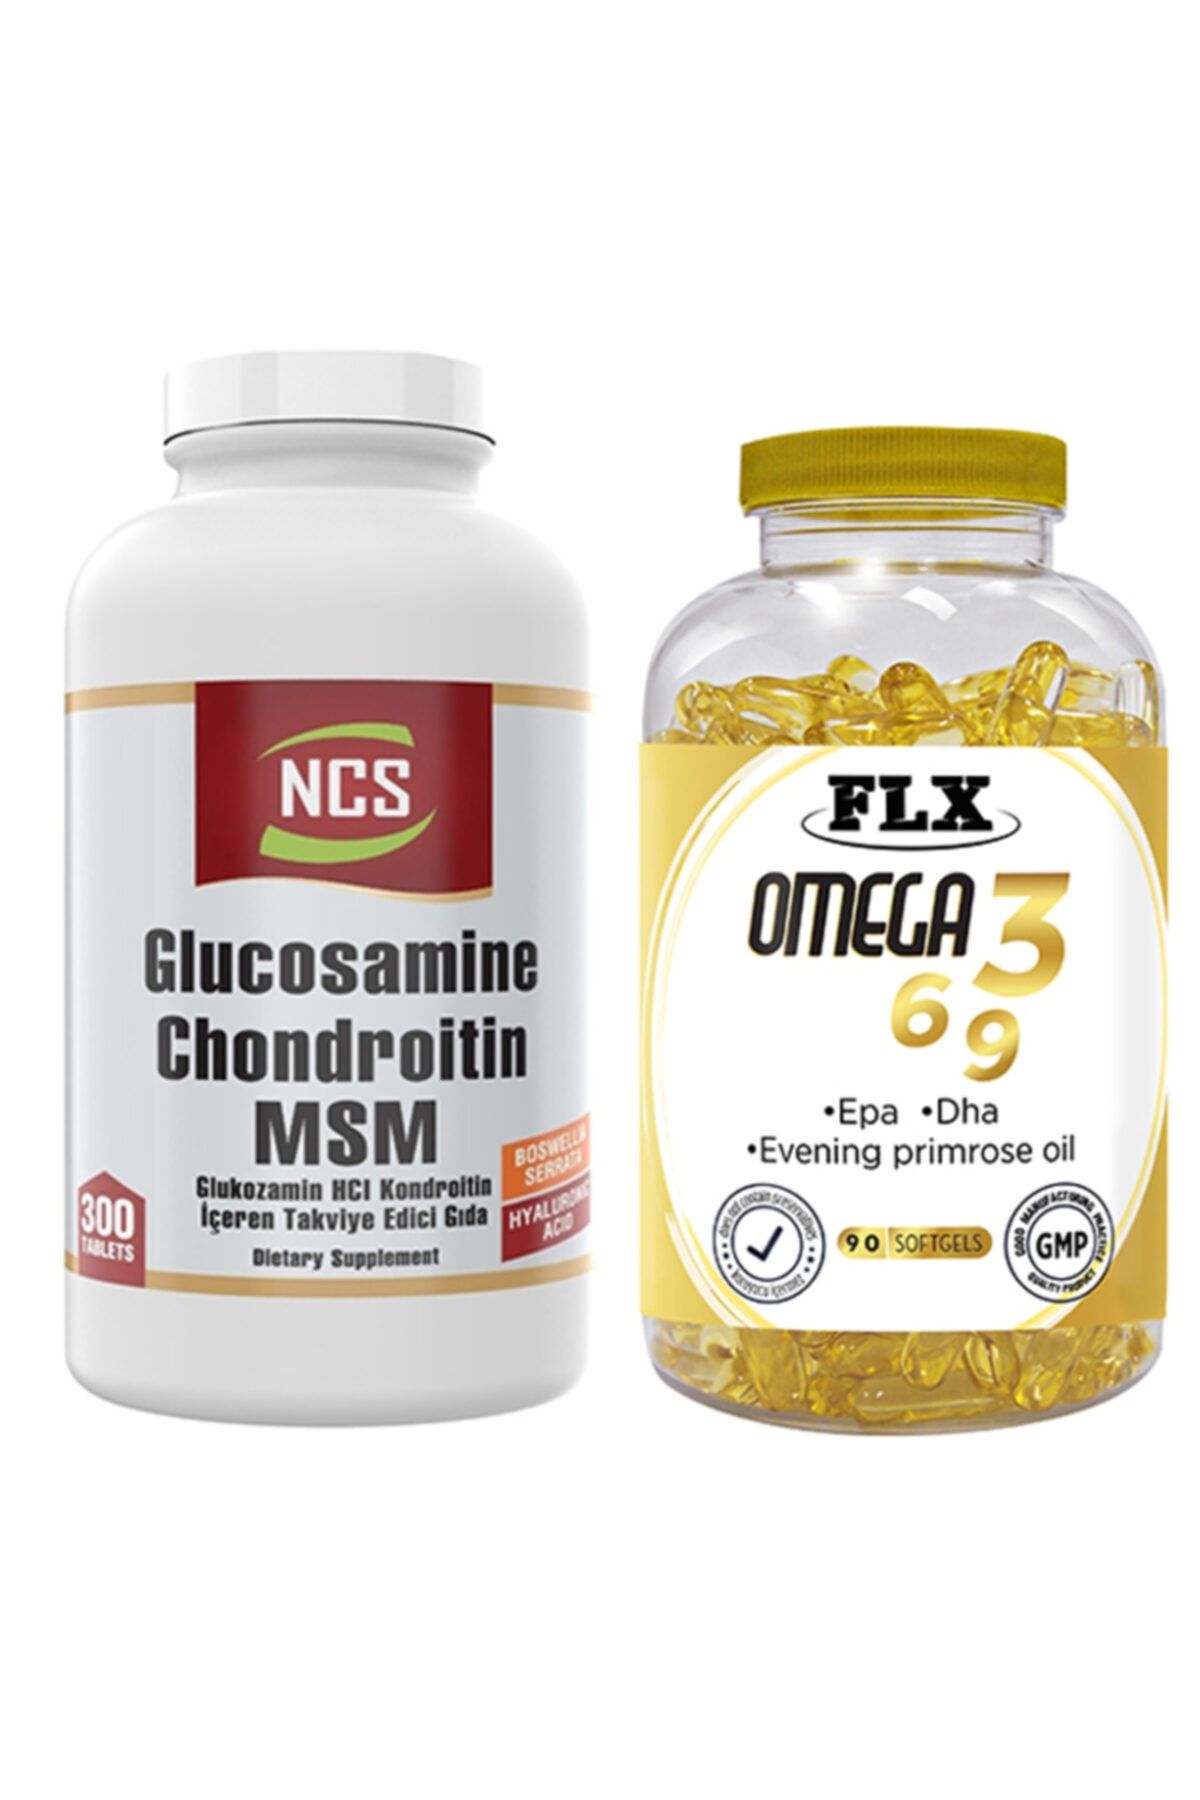 Ncs Glucosamine Chondroitin Msm Boswellia Glukozamin 300 Tablet & Flx Omega 3-6-9 90 Tablet